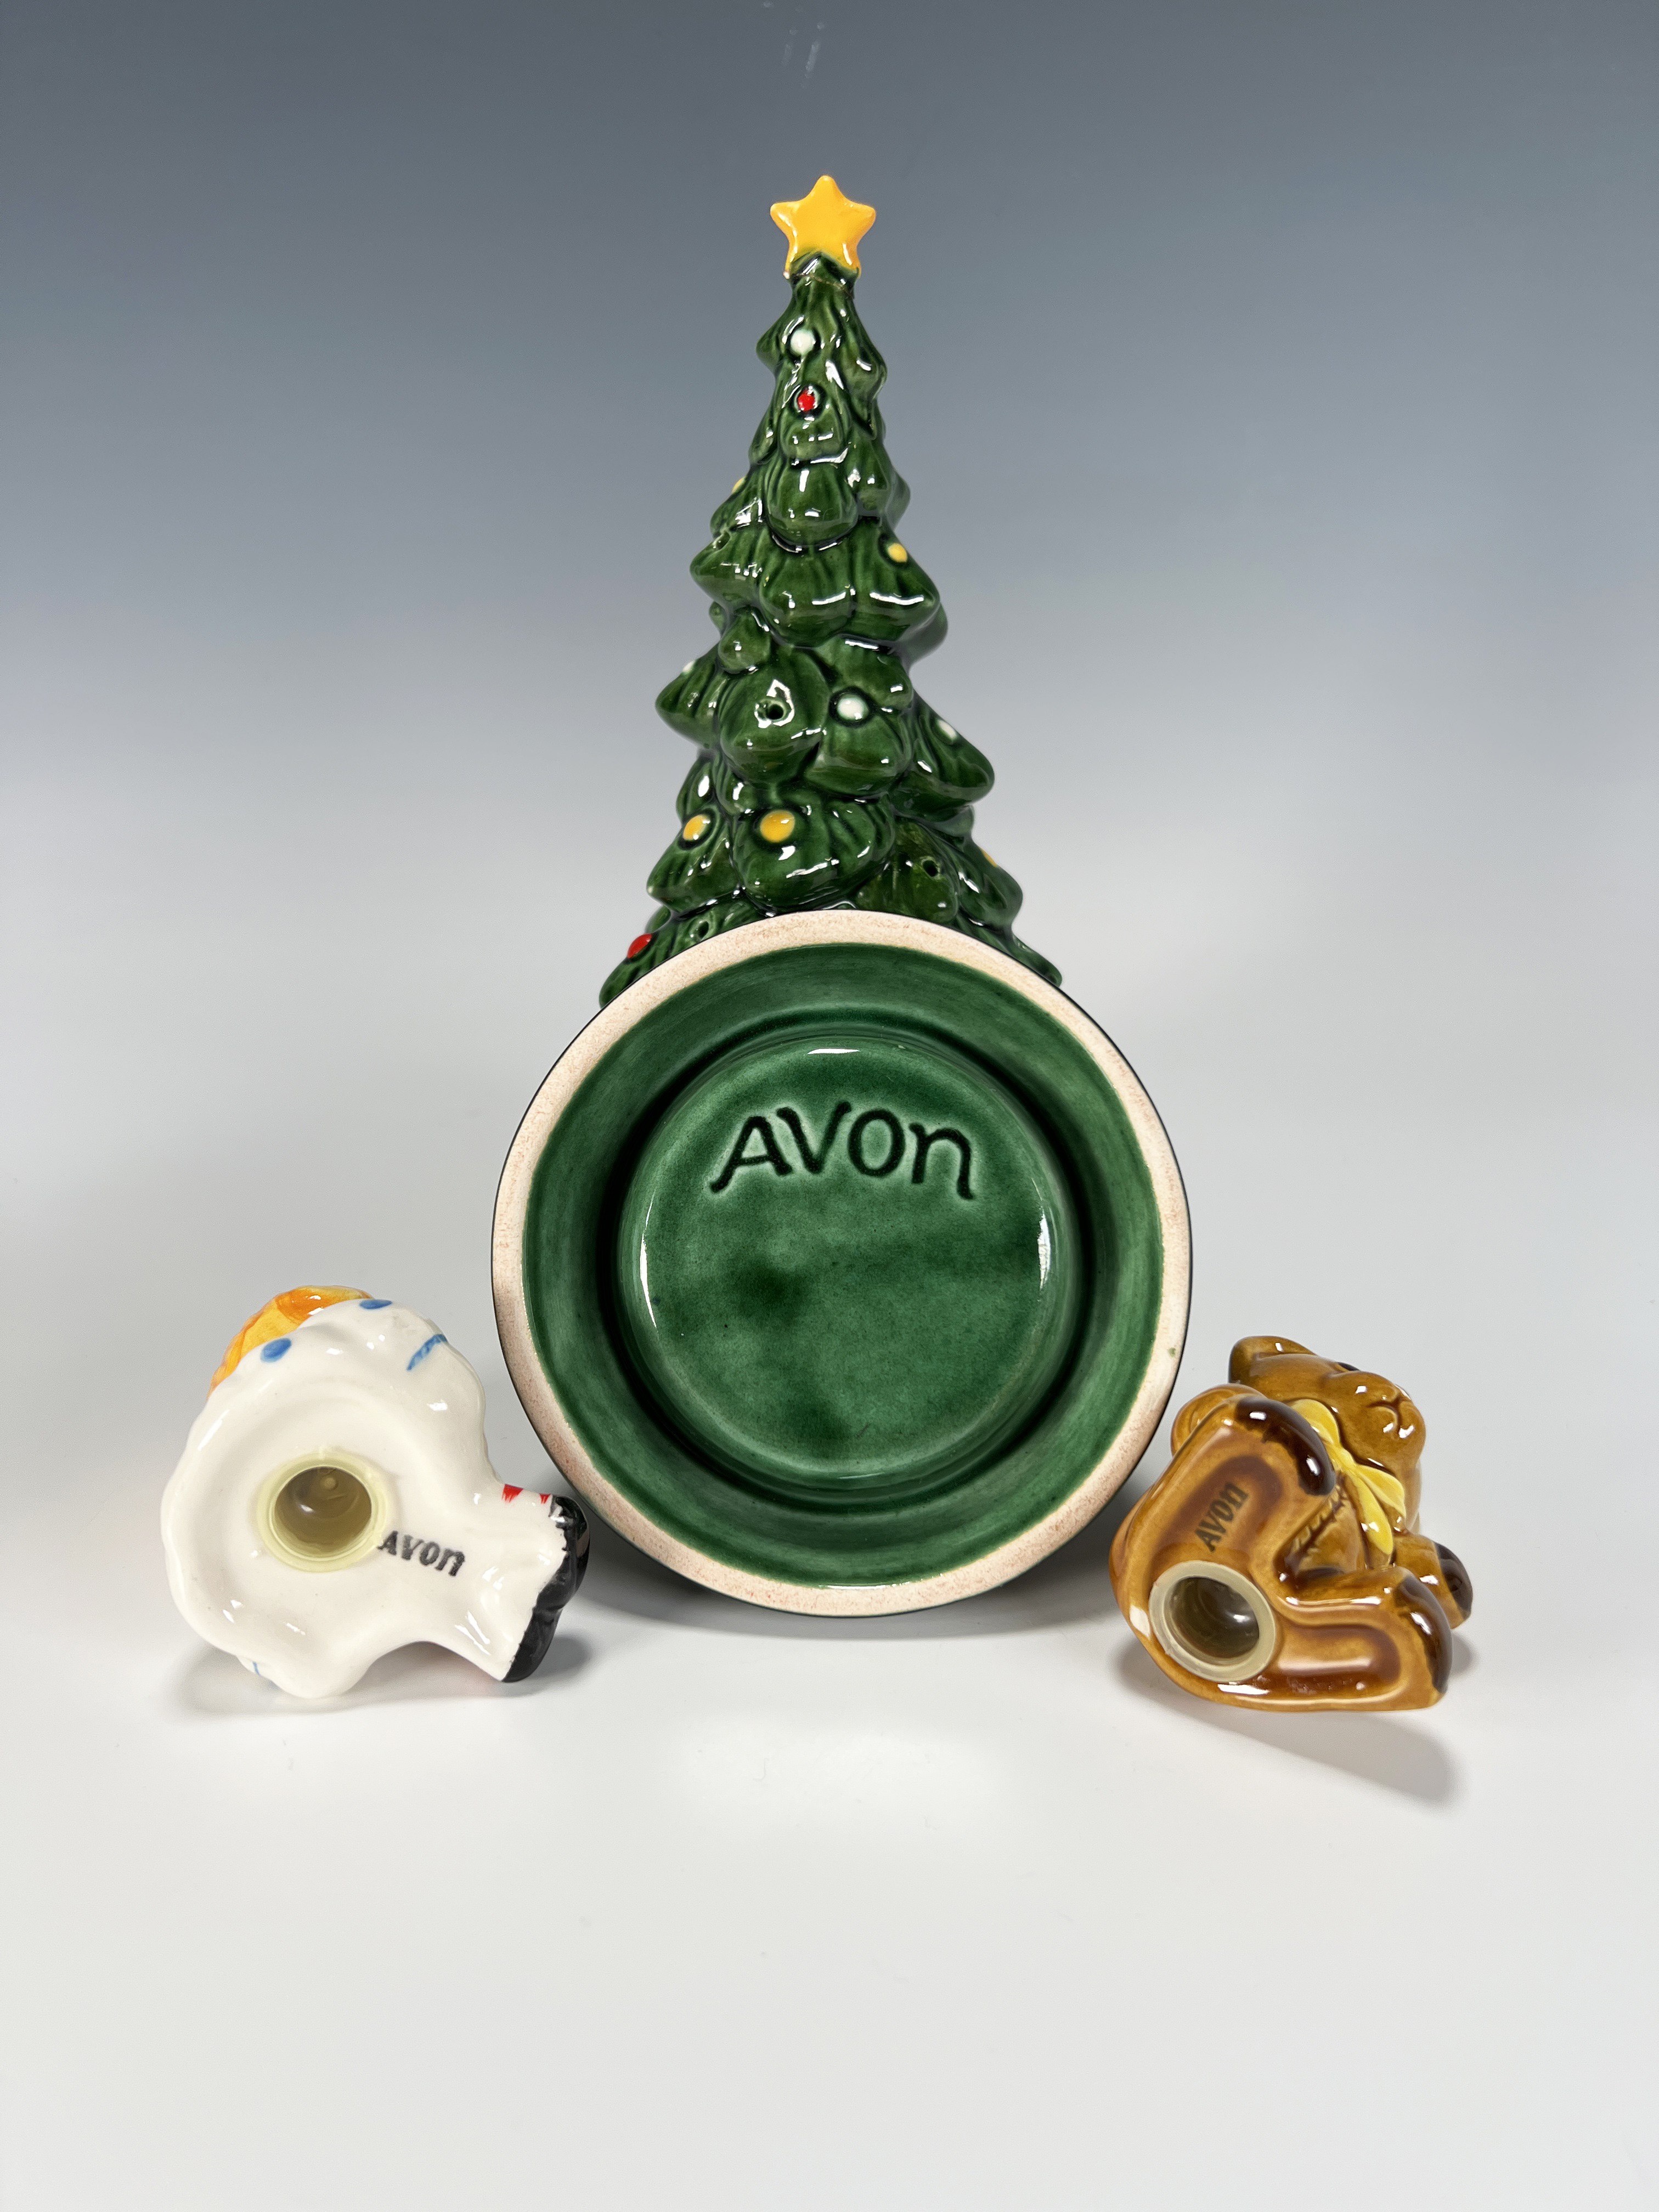 Avon Merry Christmas Tree Hostess Set In Box image 2